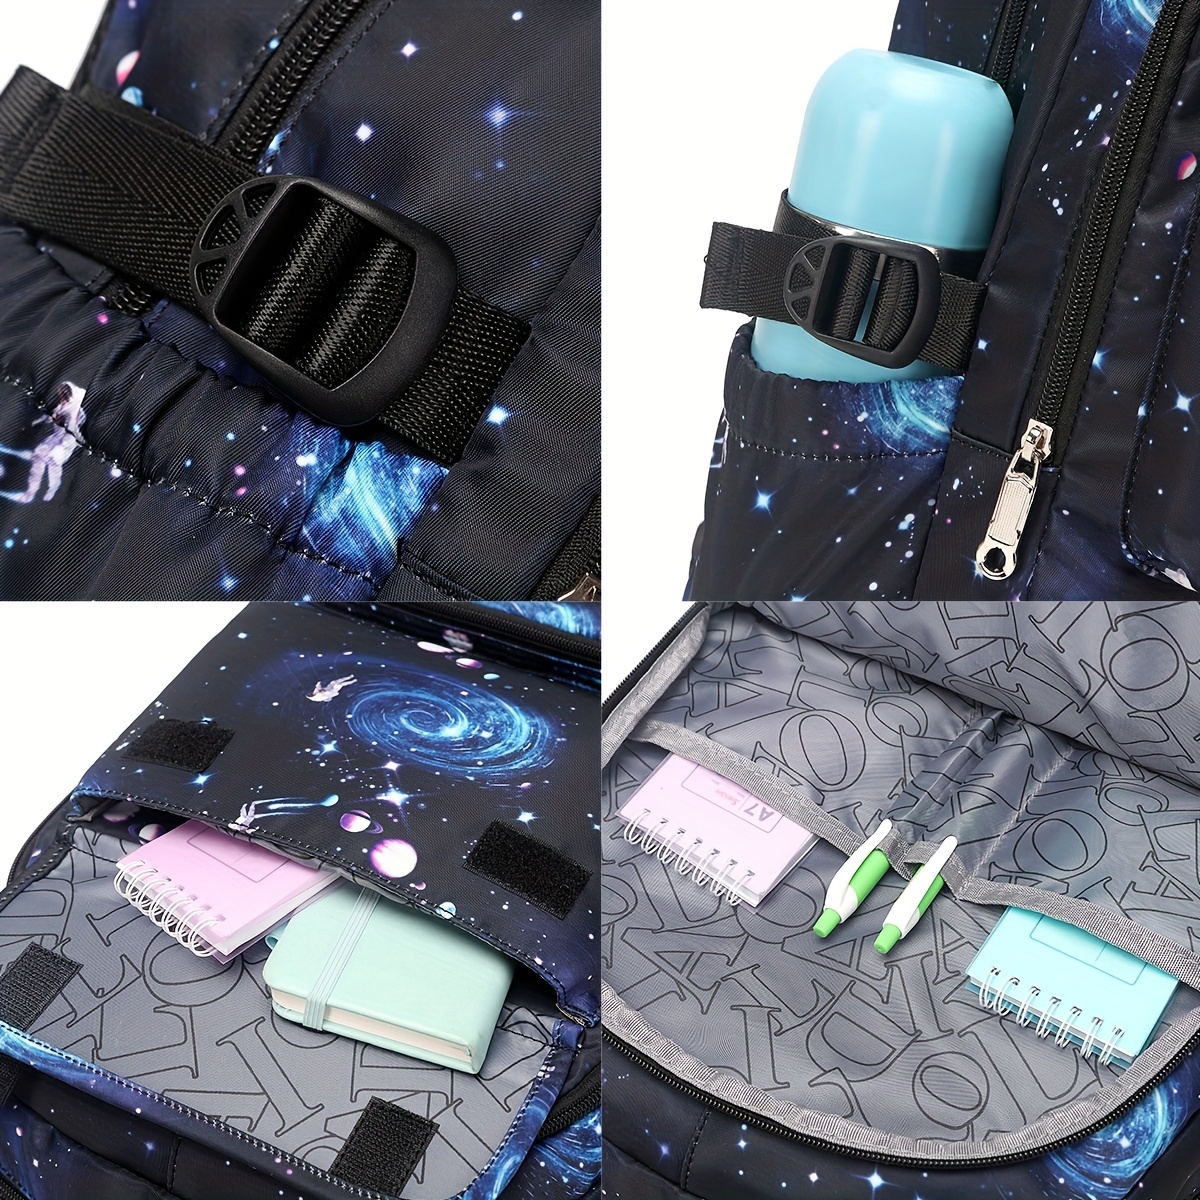 3pcs school bags set starry sky cartoon backpack lunch bag pencil case set for boys school season gift 15 6in backpack